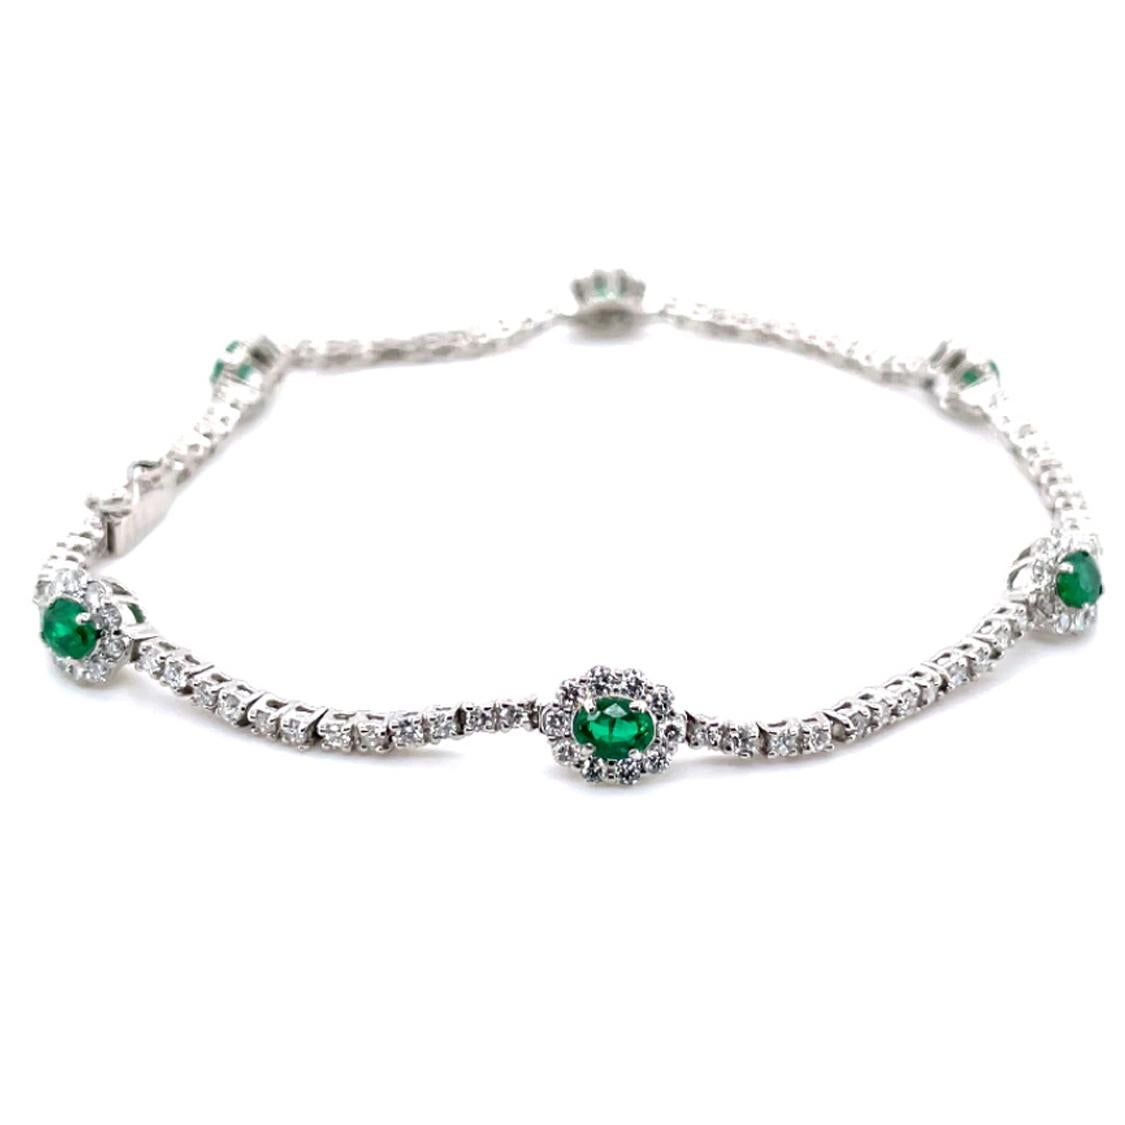 Oval Cut 0.86 Carat Natural Emeralds and Diamonds Tennis Bracelet Set in Platinum